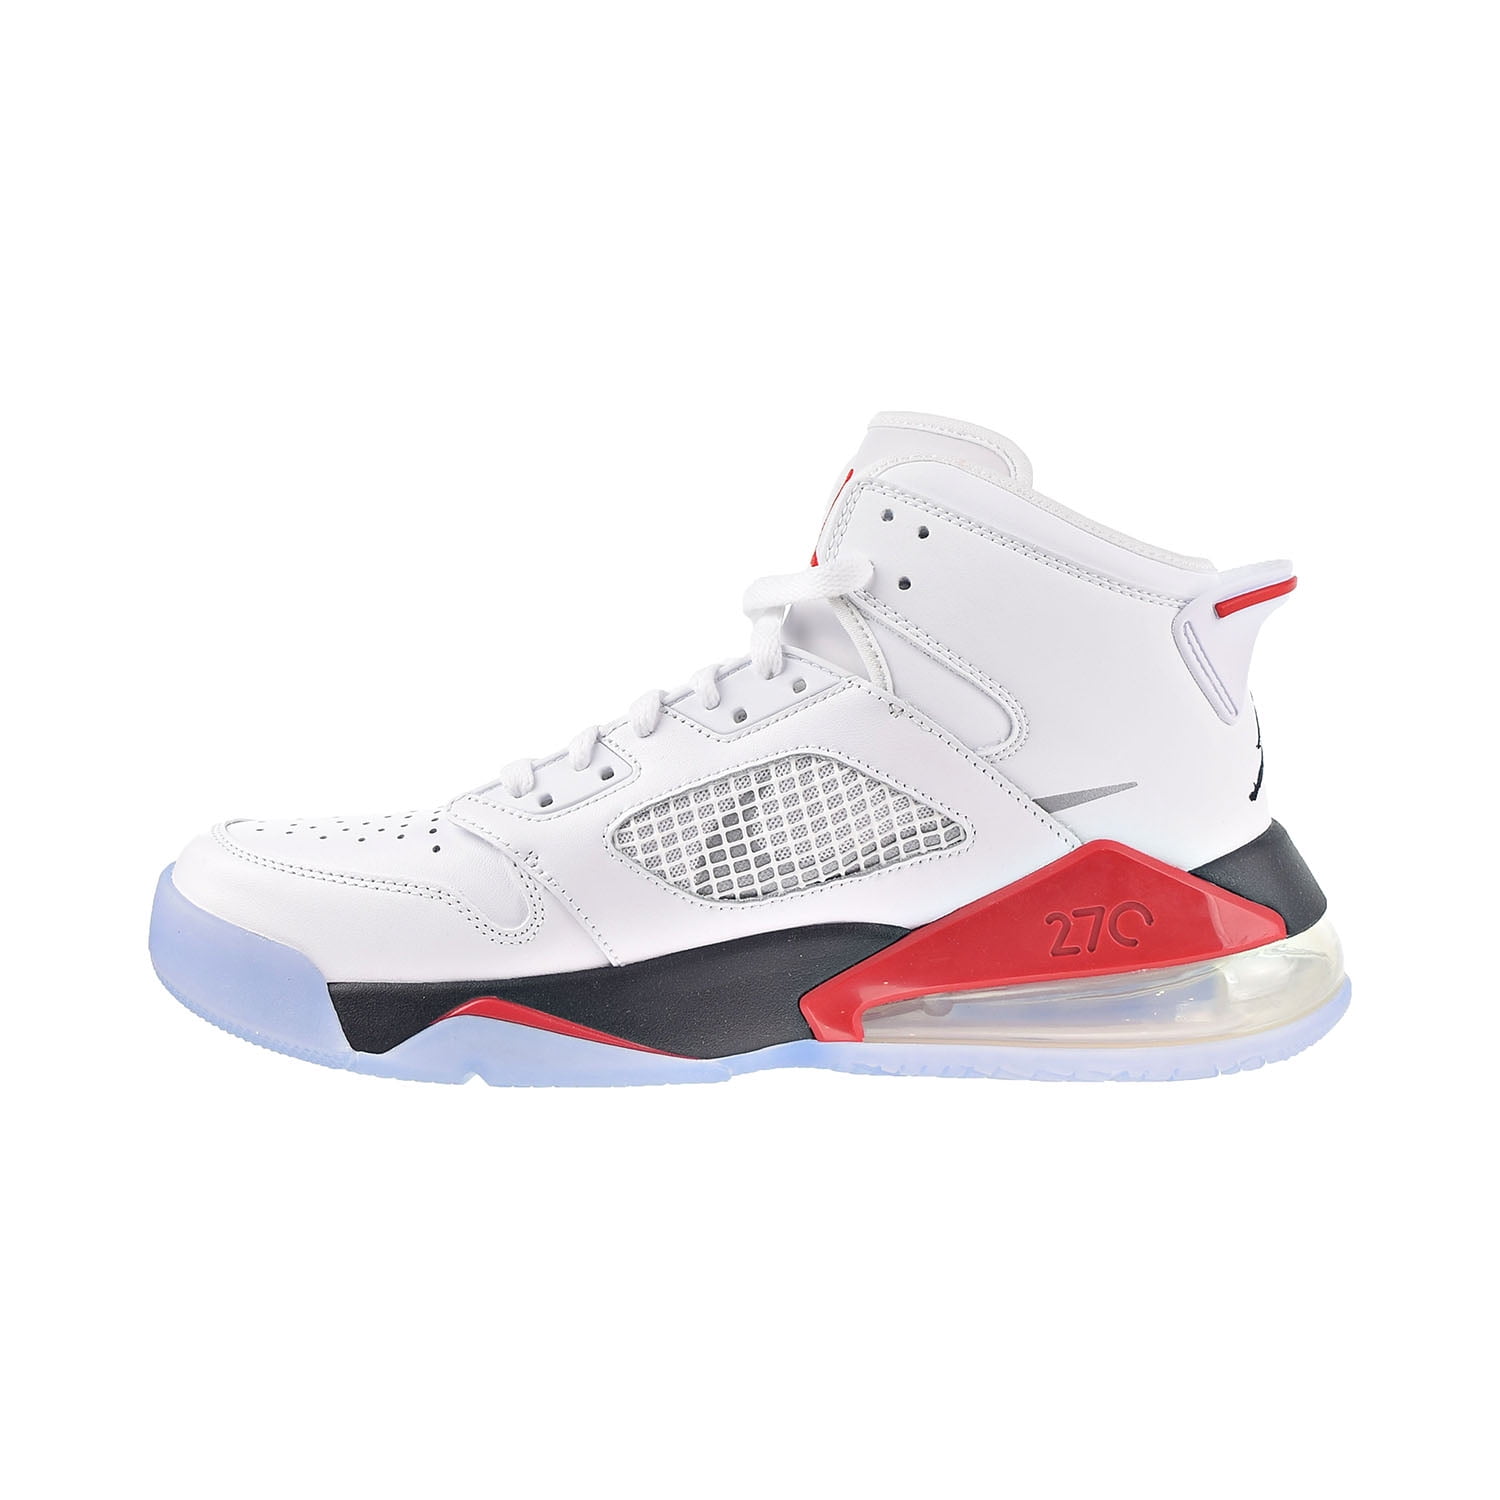 Nike Jordan Mars Men's Shoes White-Reflect Silver-Fire Red-Black cd7070-100 -